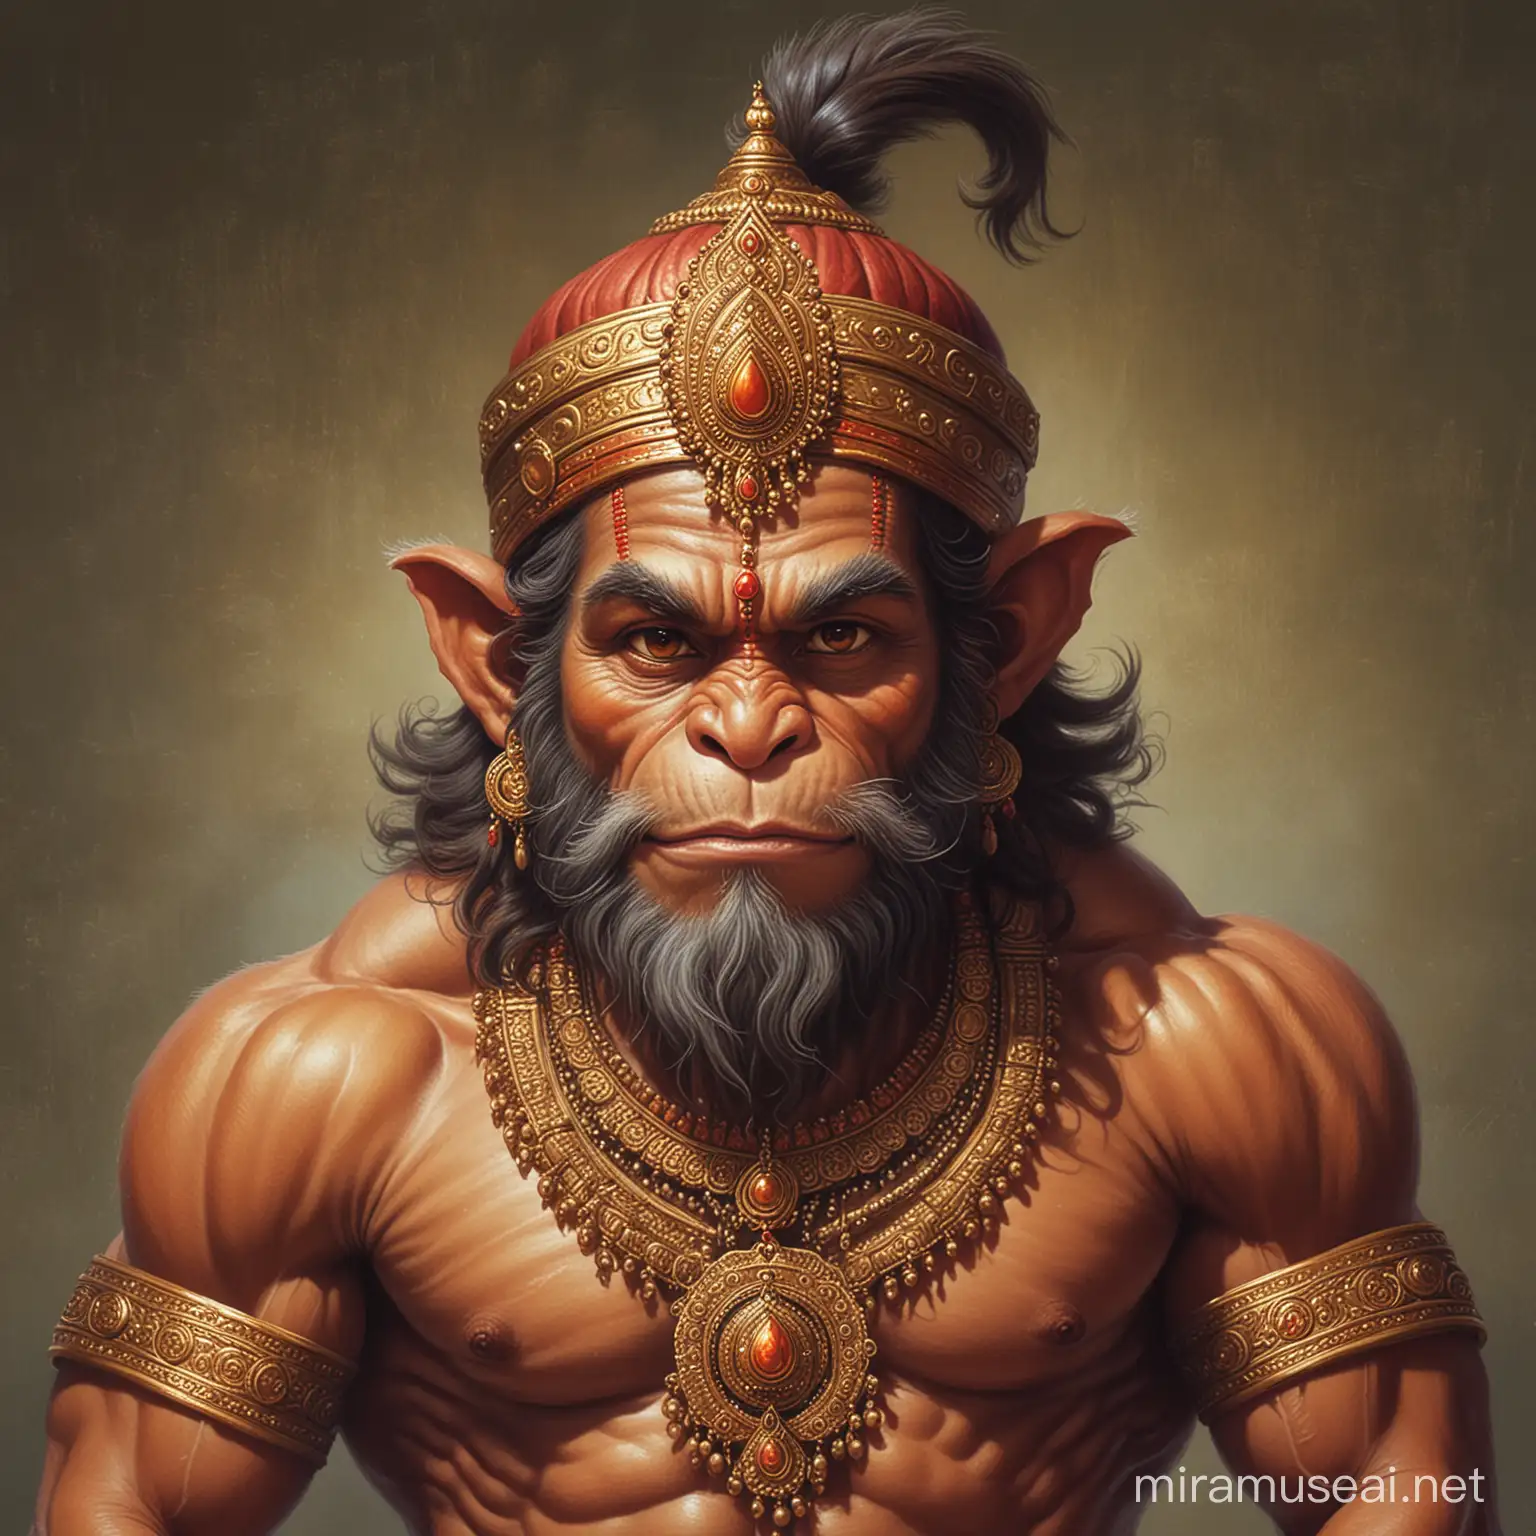 Devotional Artwork of Lord Hanuman in Vibrant Colors